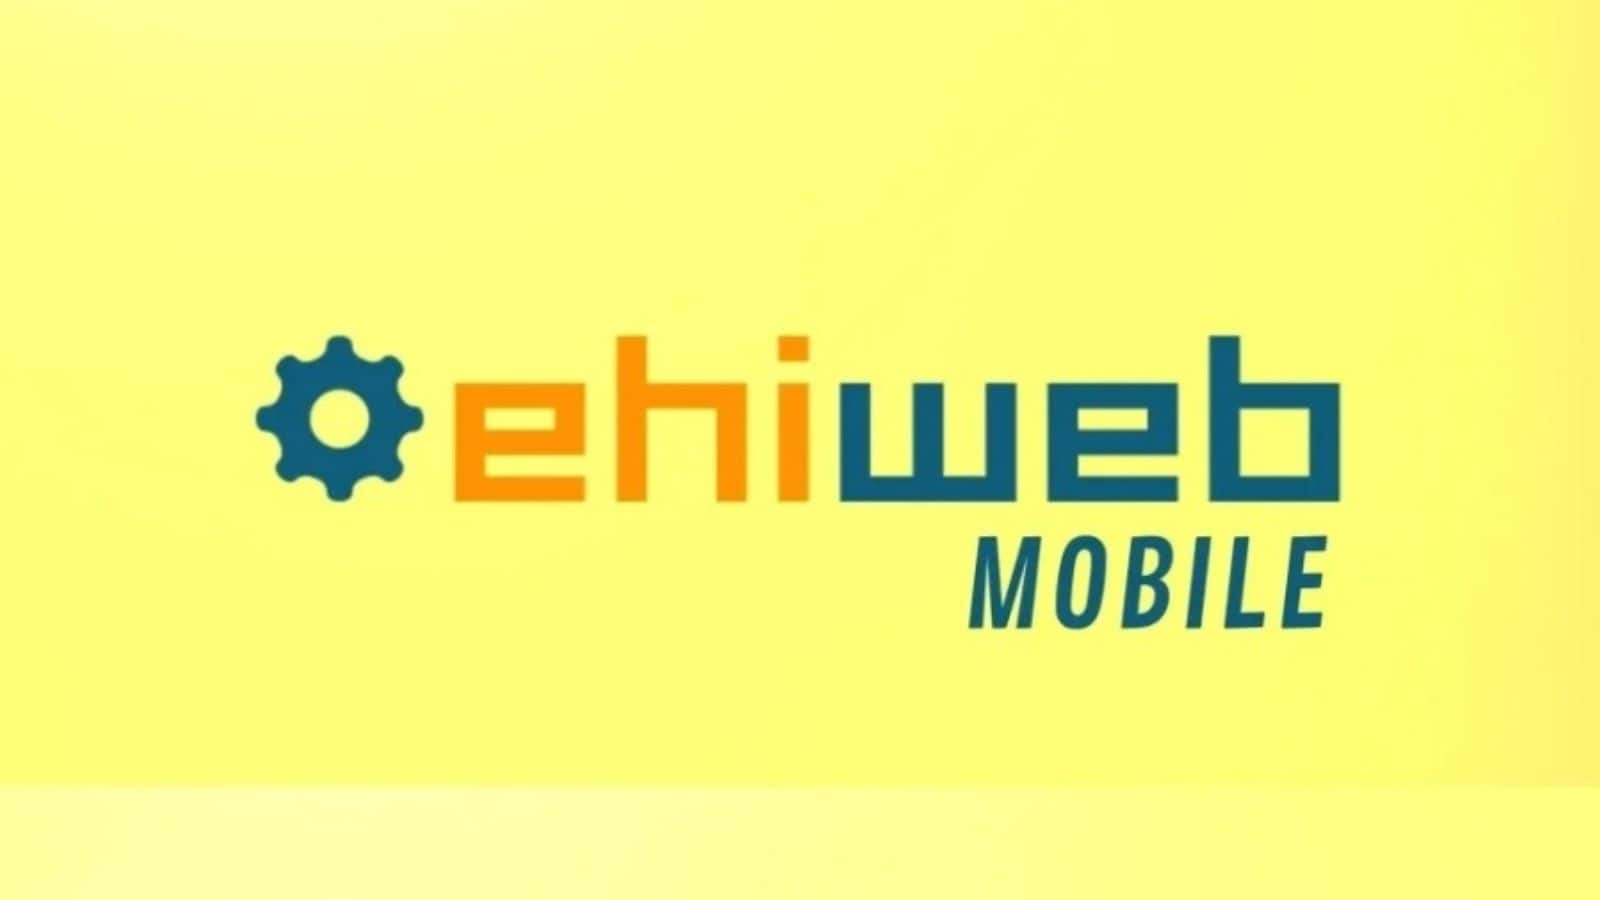 Ehiweb Mobile nuove offerte 